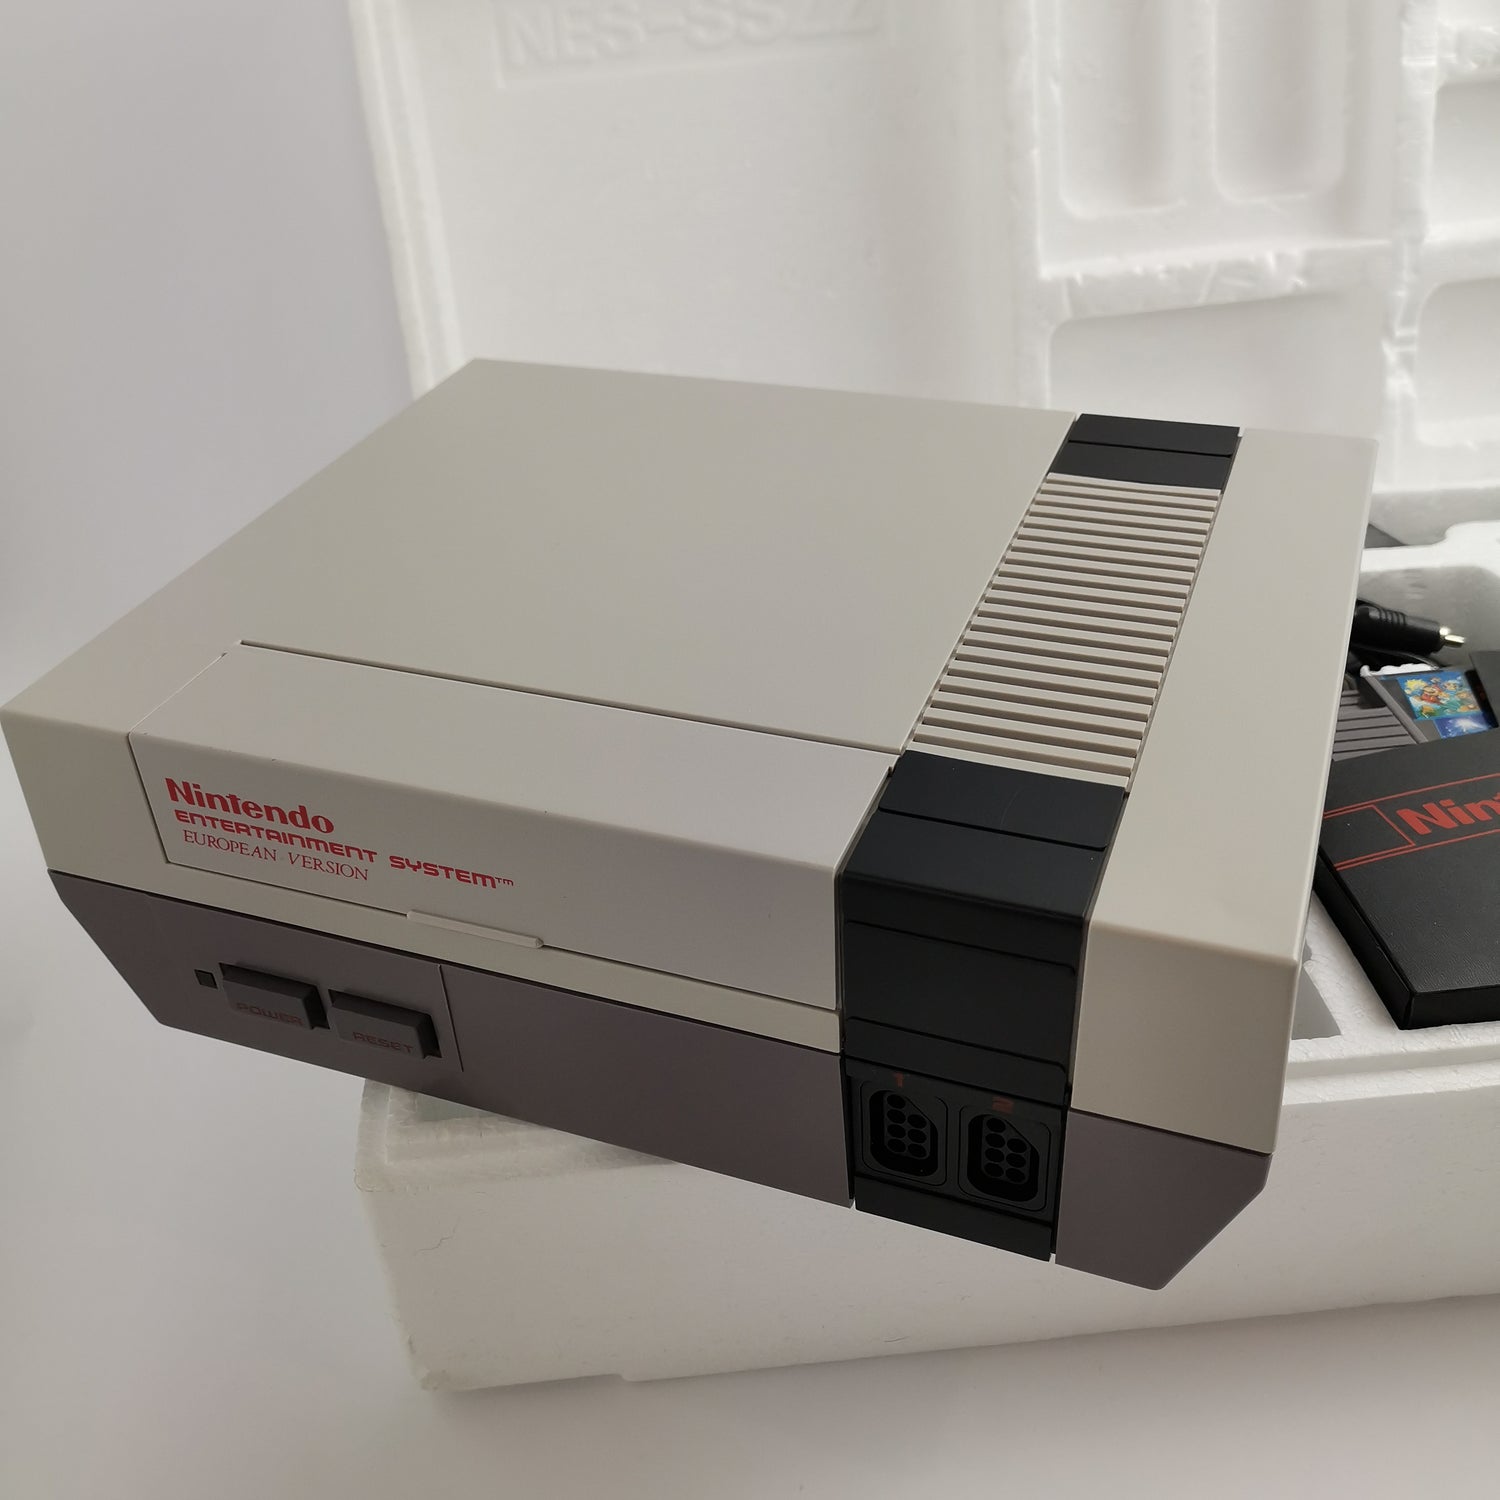 Nintendo Entertainment System Console: NES 4 Players SUPER SET NOE | Original packaging - [3]